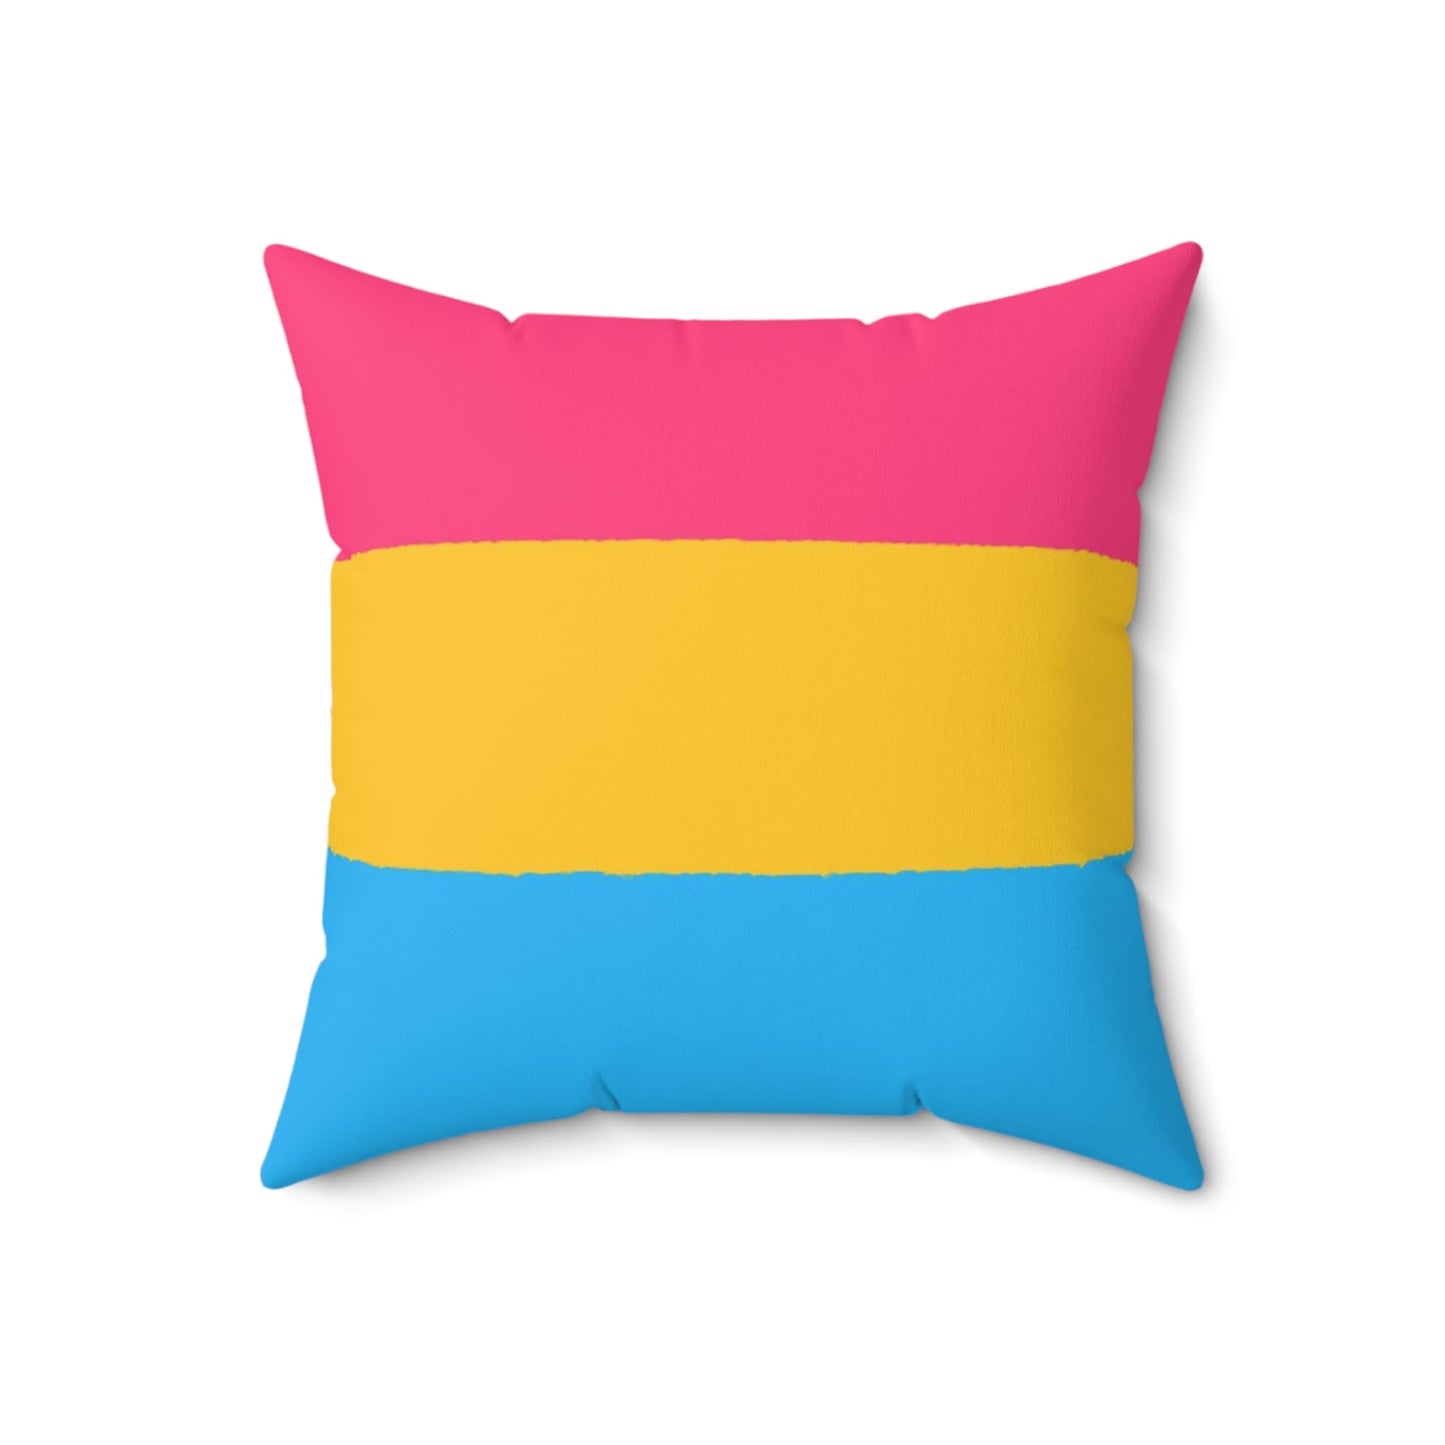 pansexual pillow flatlay